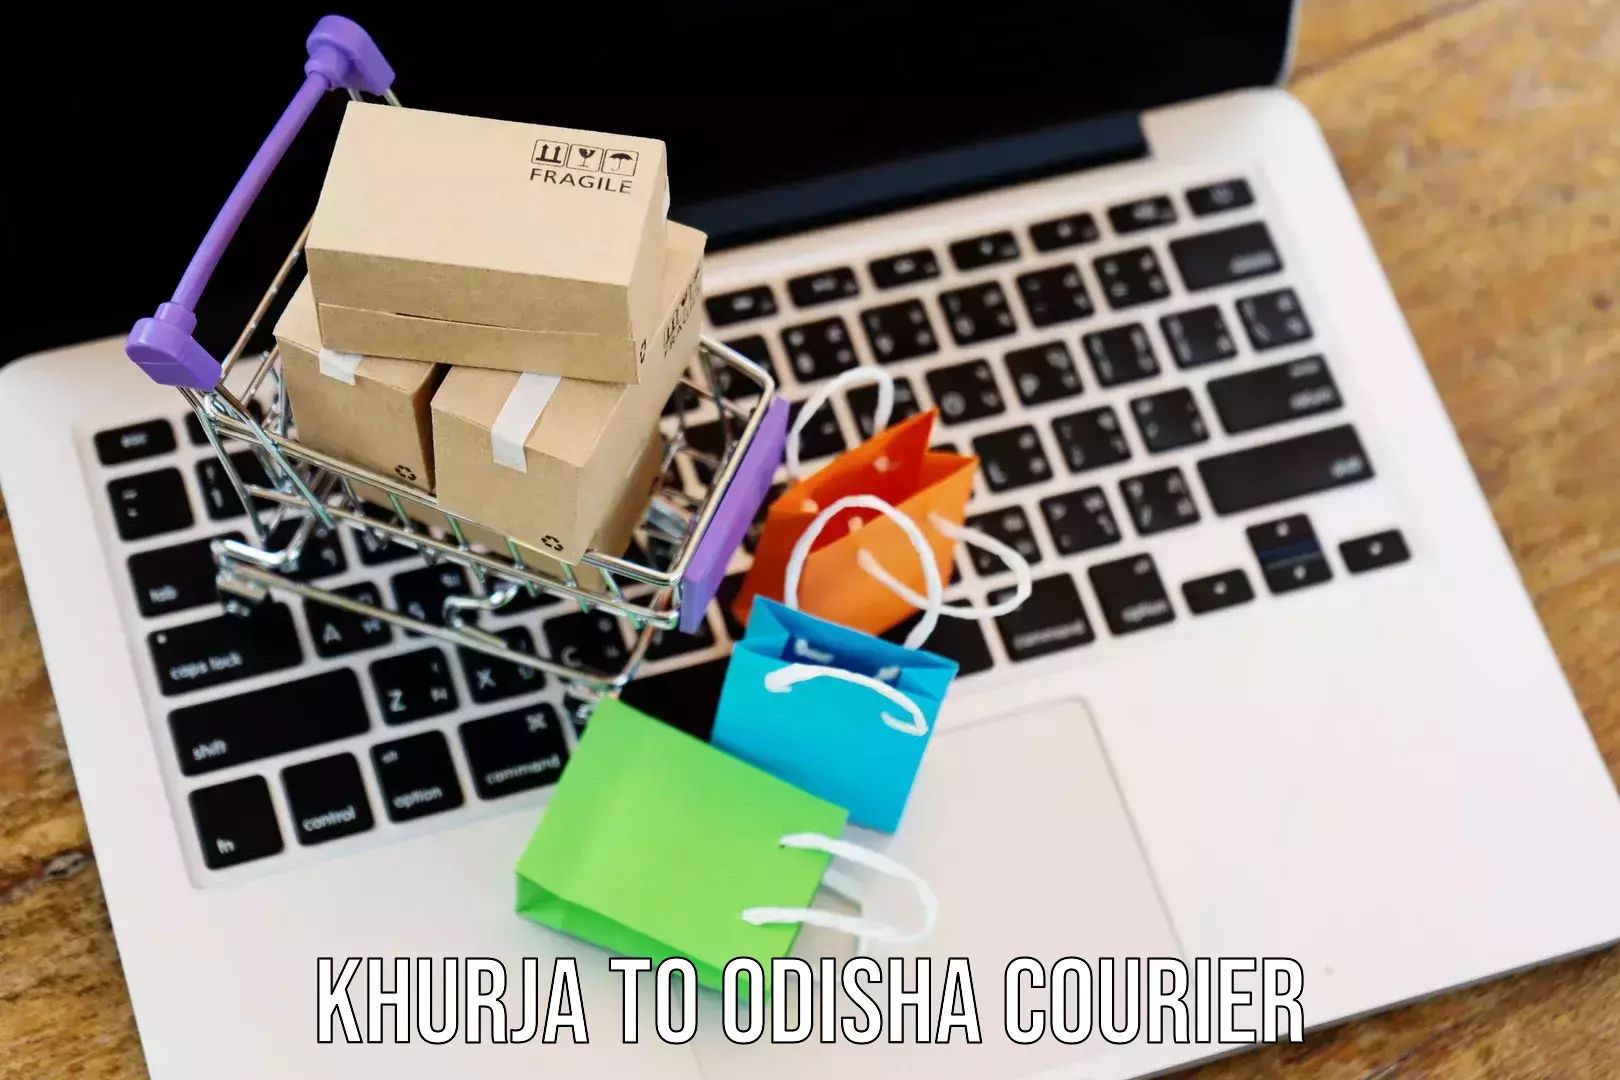 Advanced shipping technology Khurja to Odisha